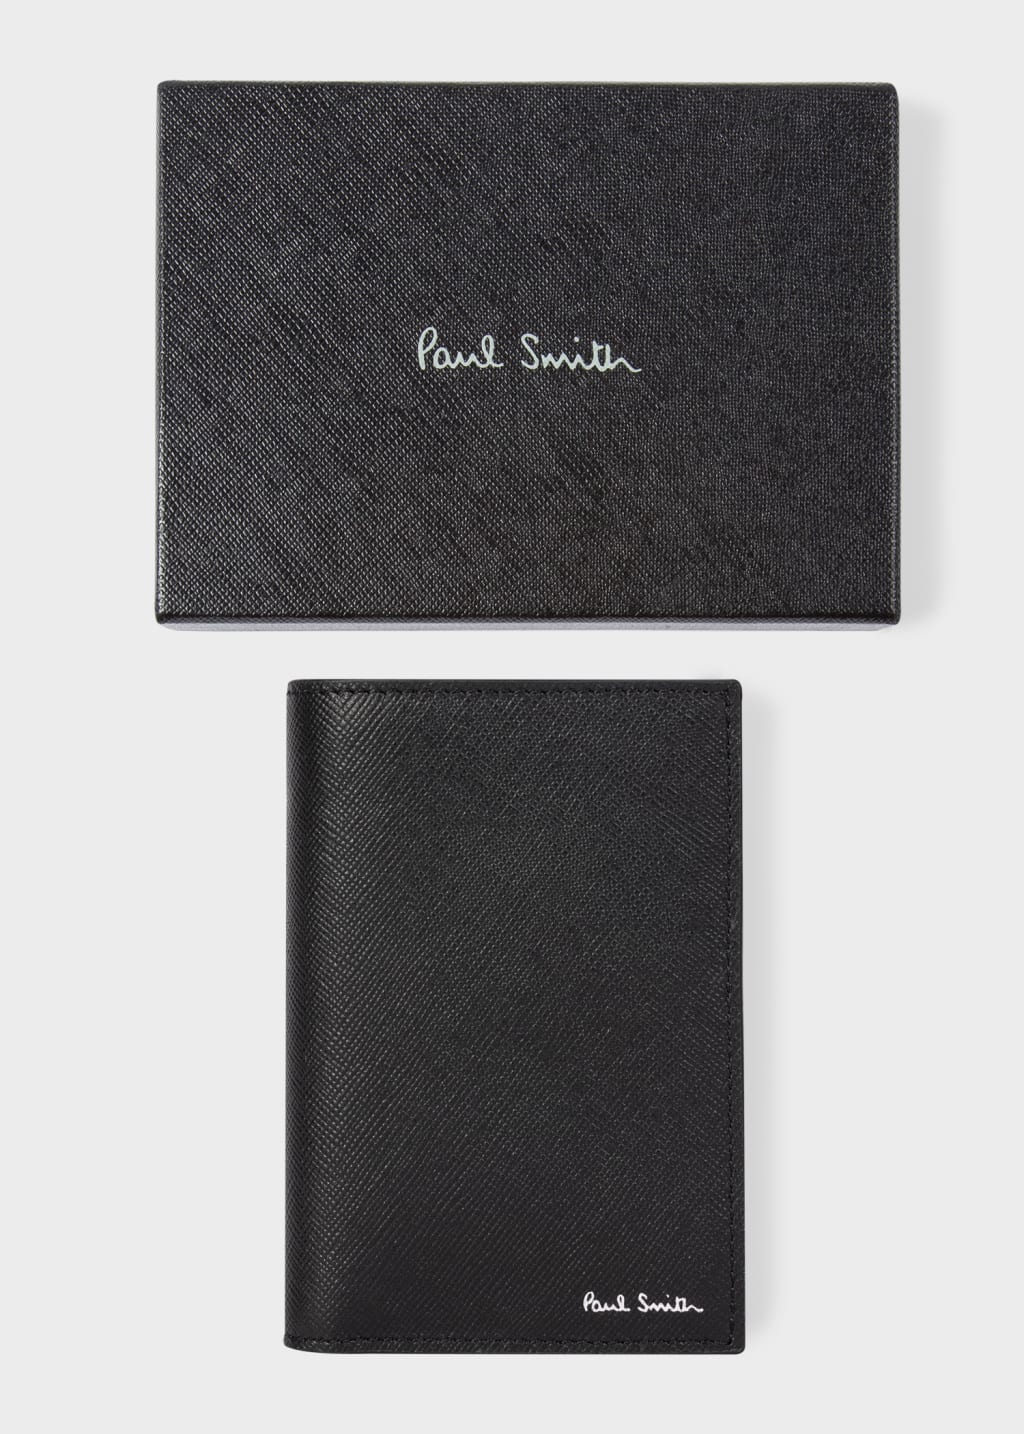 Pair View - Black 'Mini Blur' Interior Credit Card Wallet Paul Smith